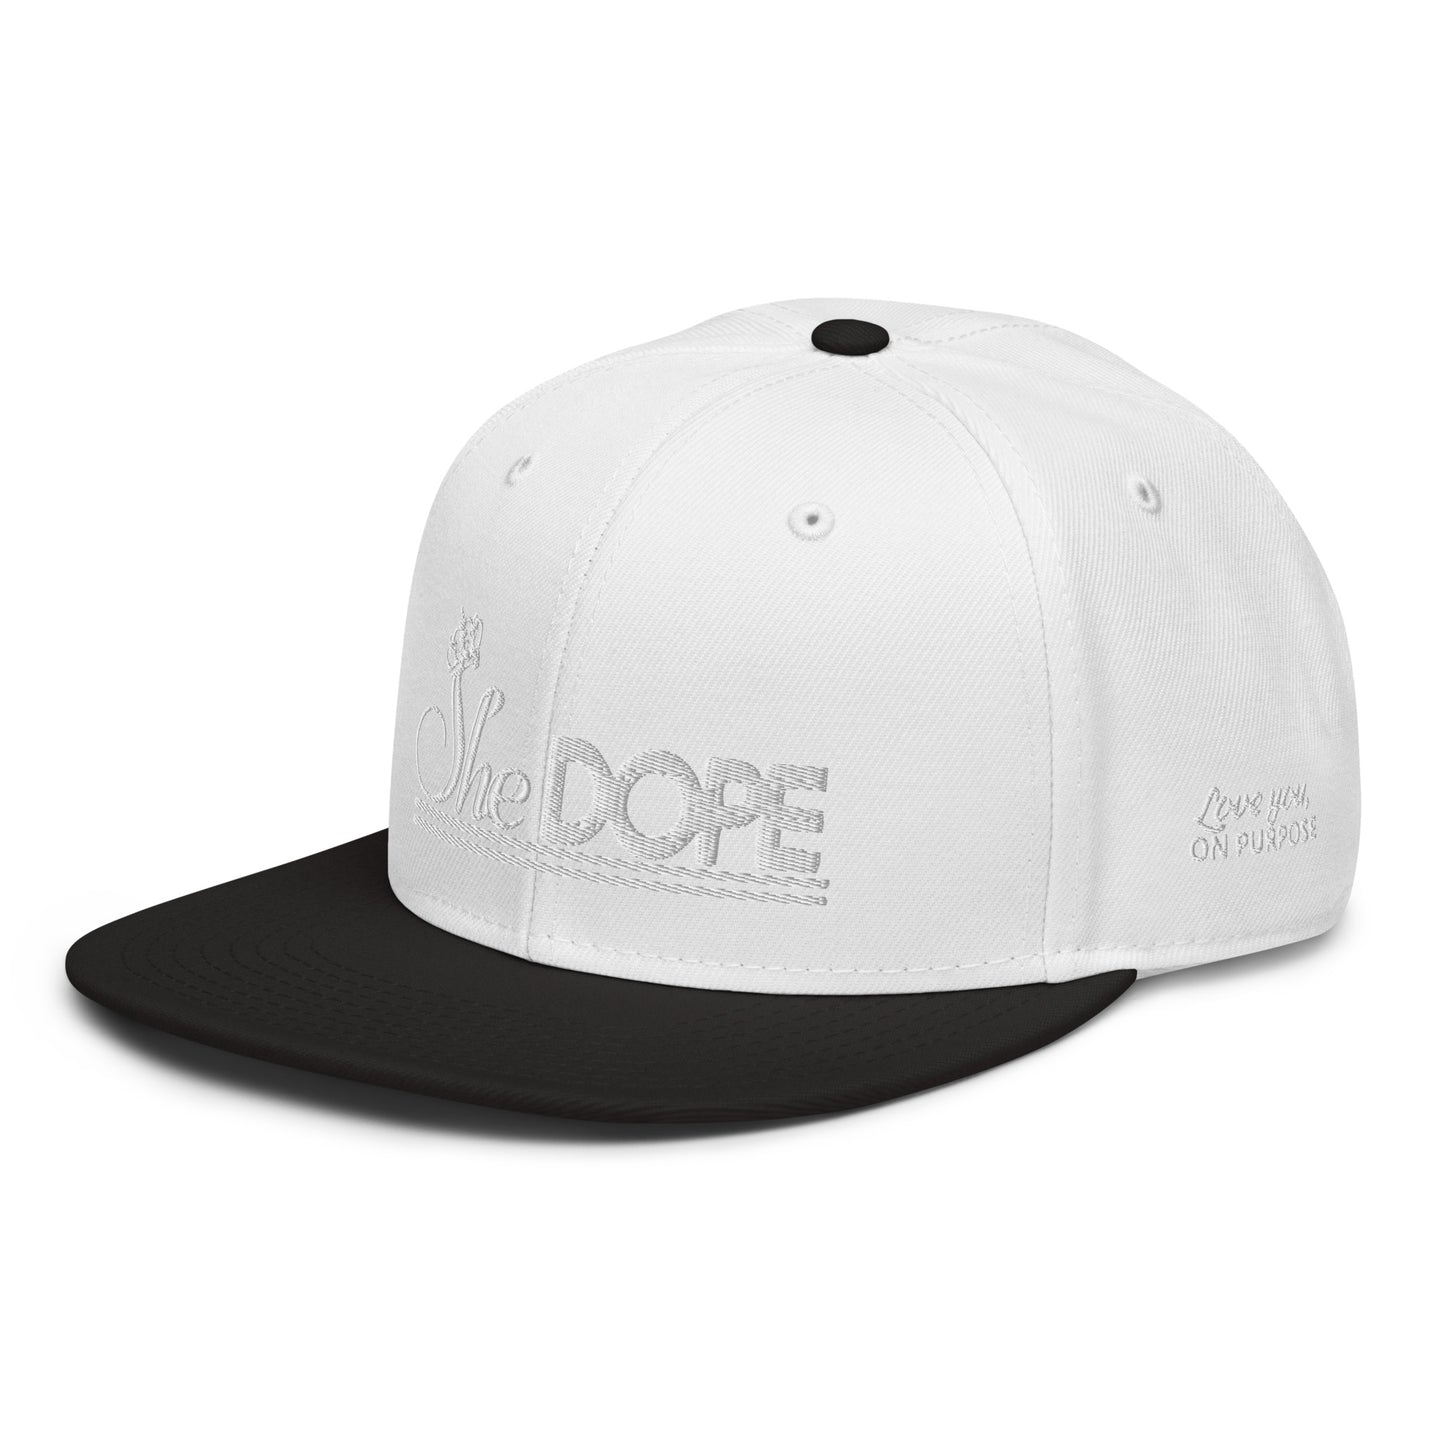 3D SheDope Snapback Hat